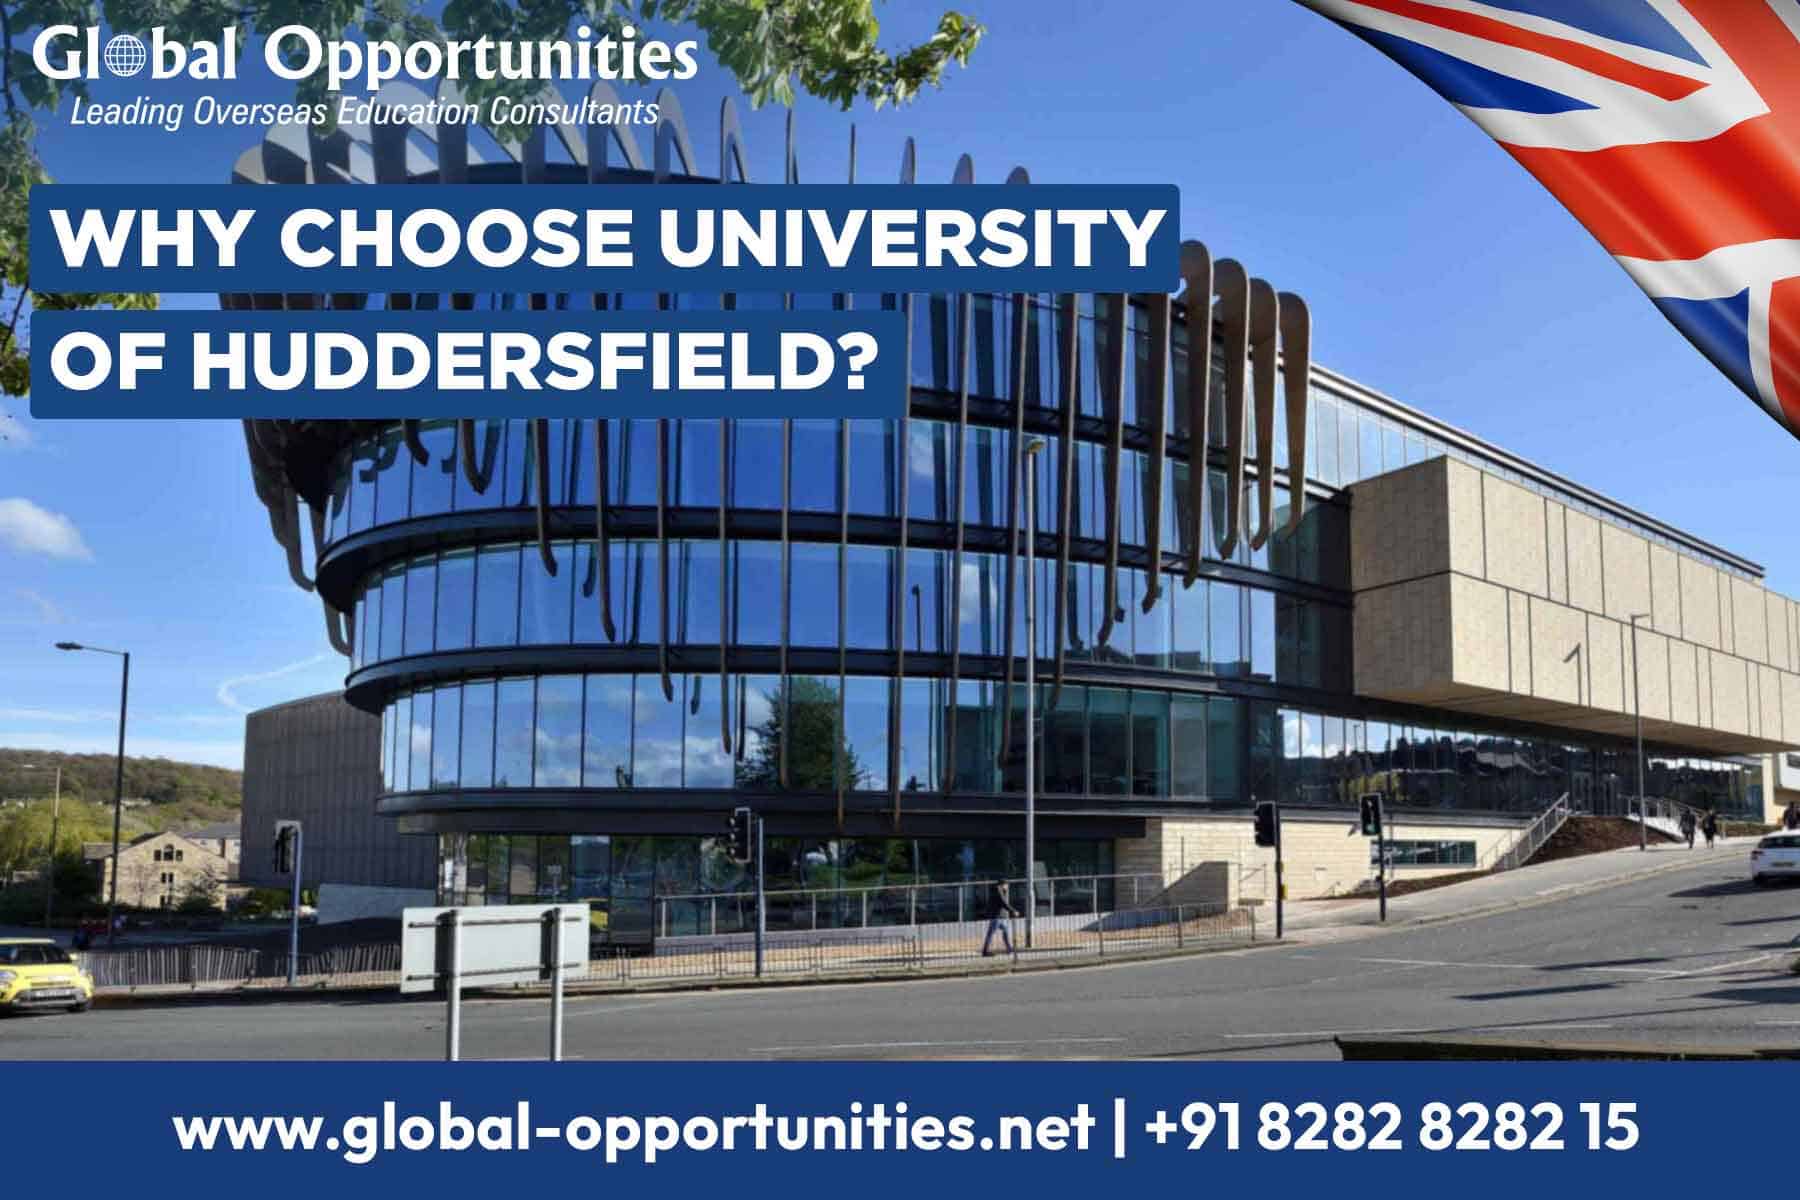 Why choose University of Huddersfield